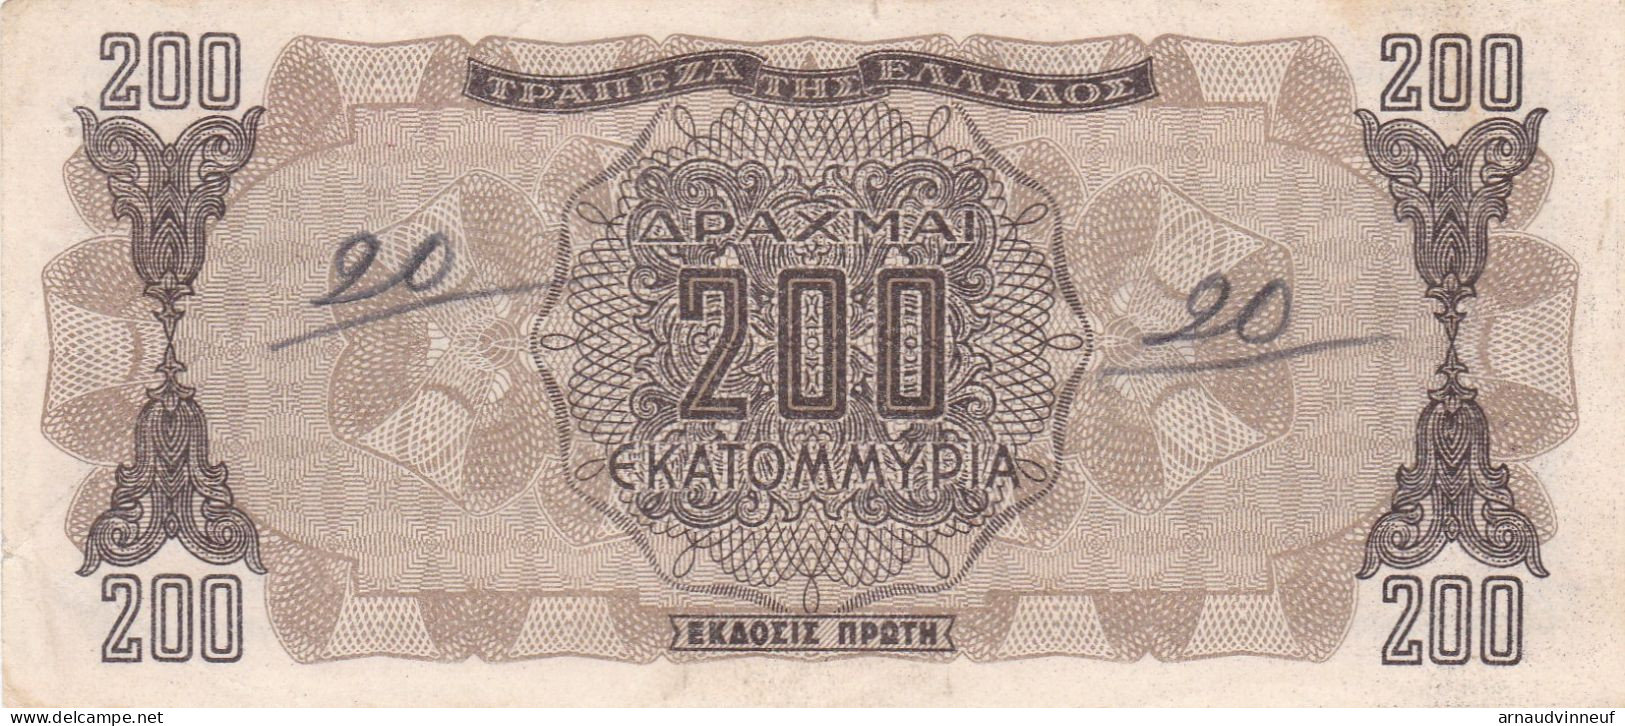 BILLET 200 EKATOMMYPIA - Griechenland